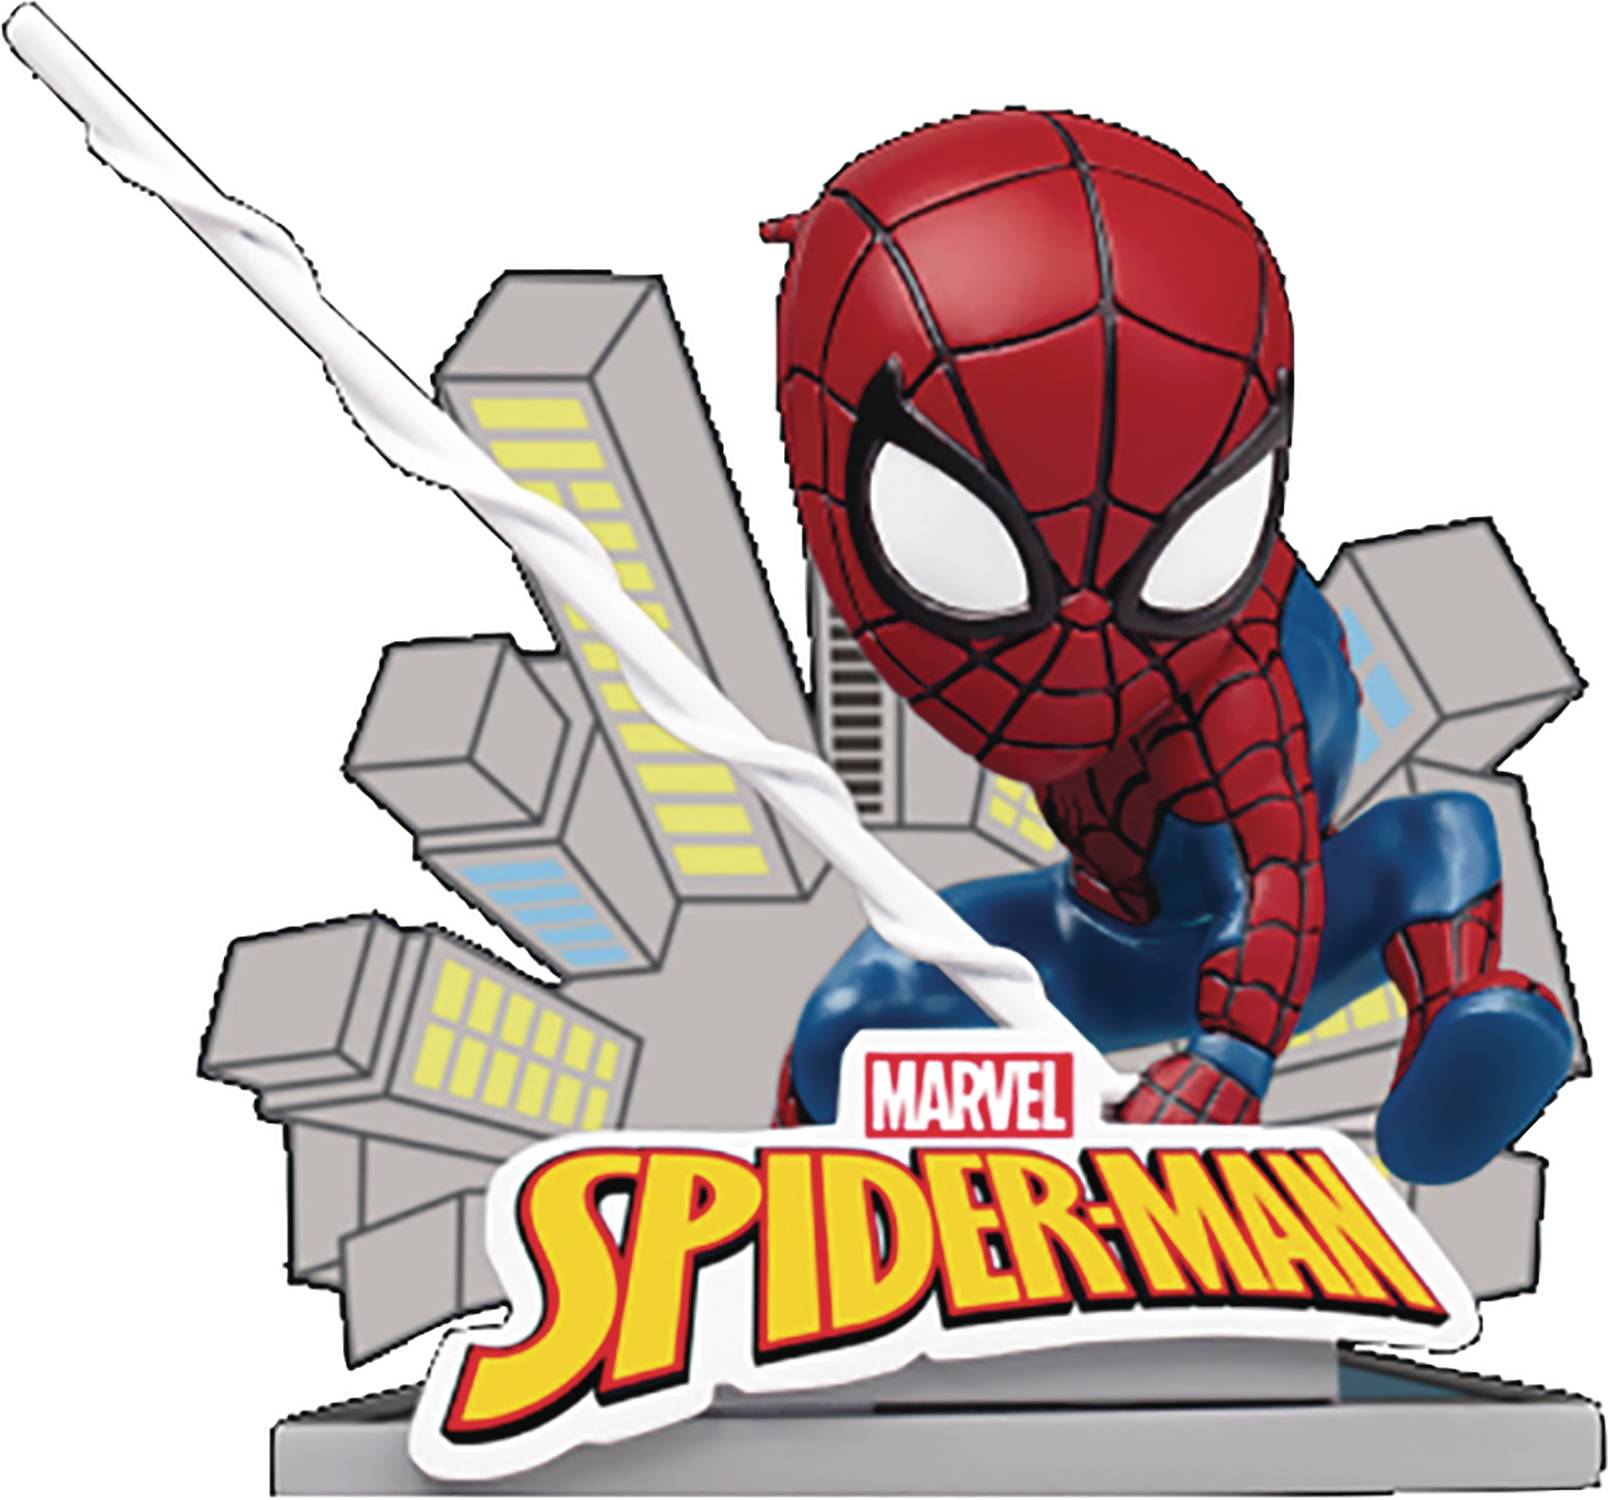 Marvel Comics Mea-013 Spider-Man Peter Parker Px Figure